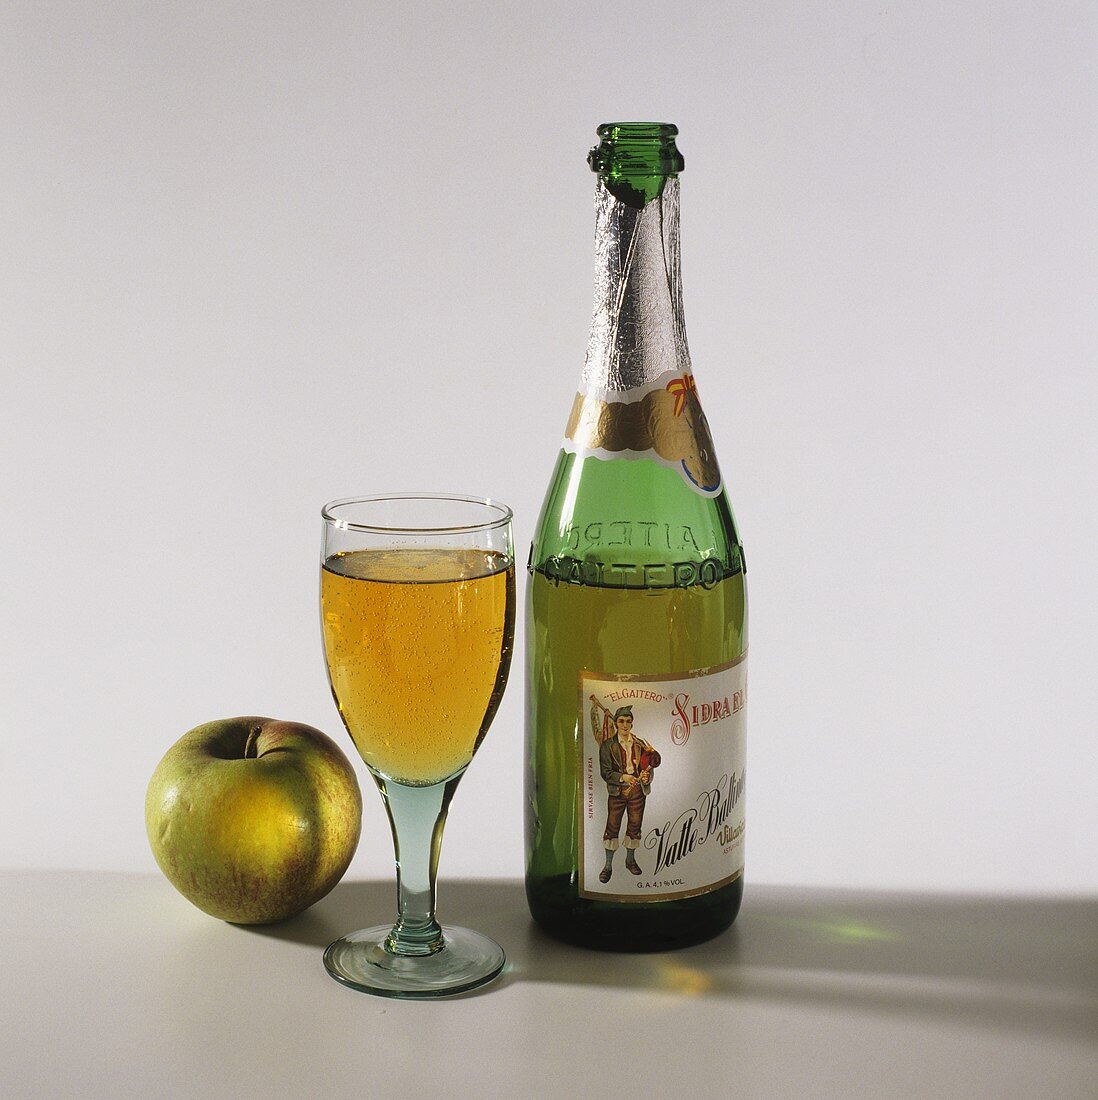 "El Gaitero" cider - apple wine from Asturias (N. Spain)